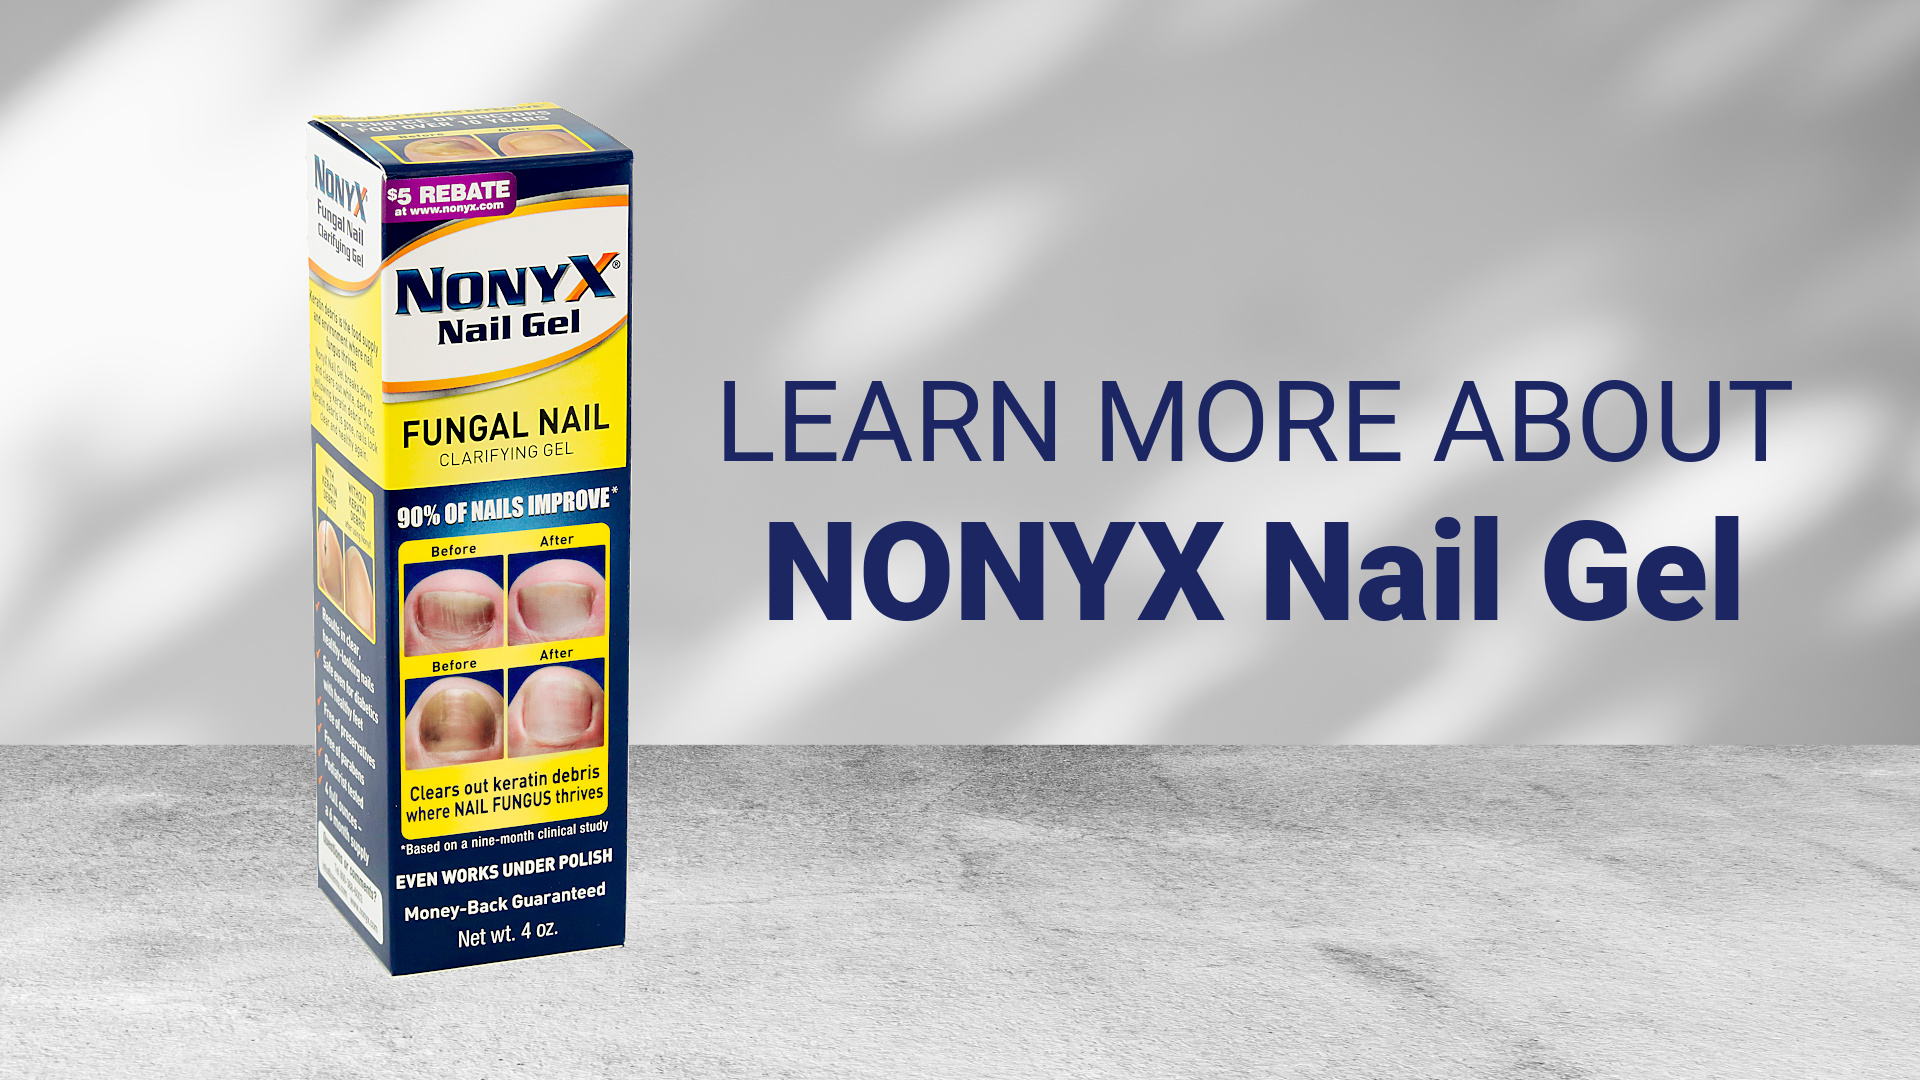 Nonyx Nail Gel Fungal Nail Clarifying Treatment 4 Oz | eBay